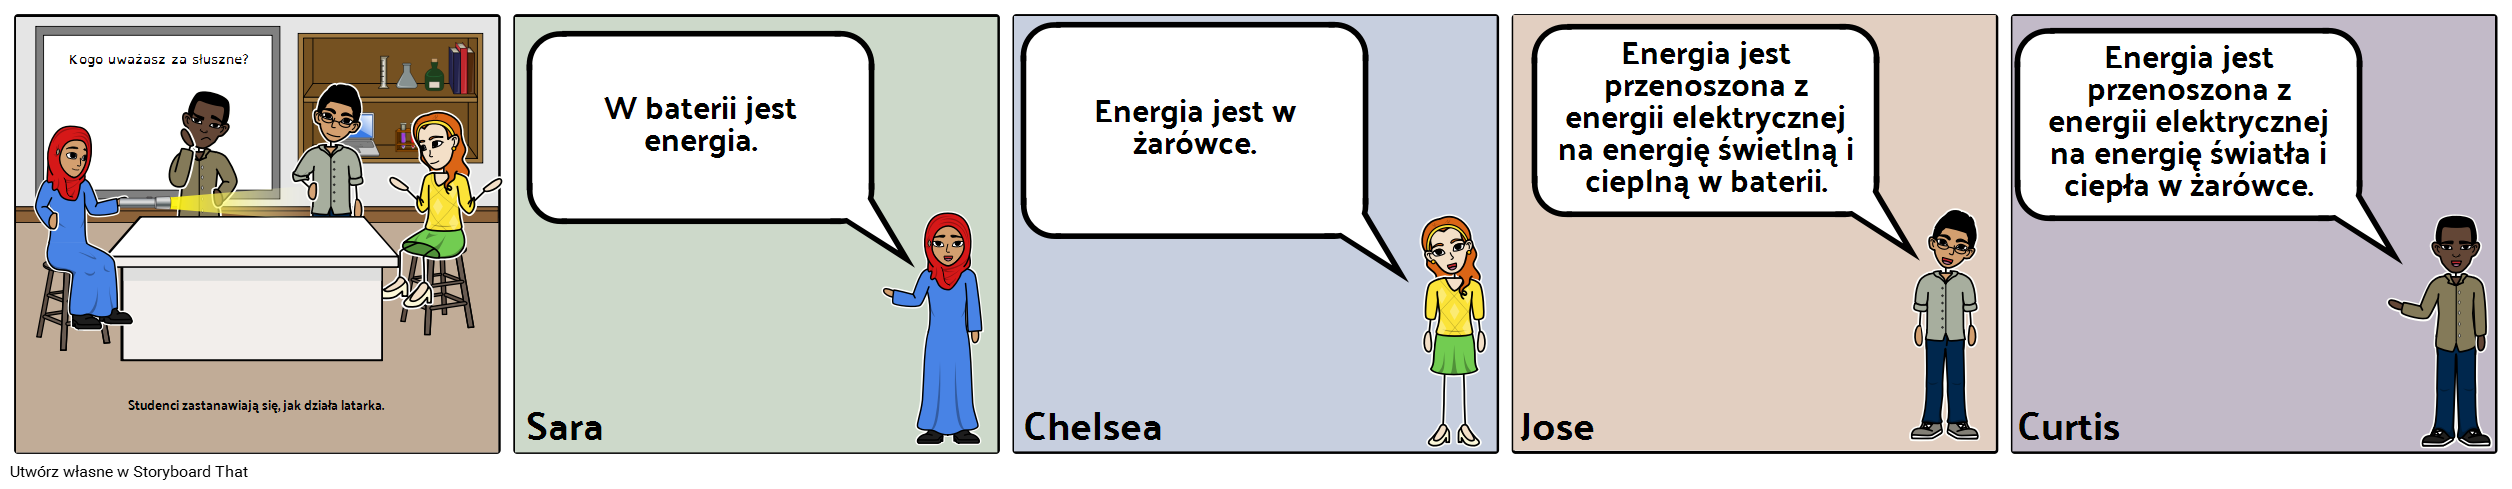 Dyskusja Storyboard - ES - Energia